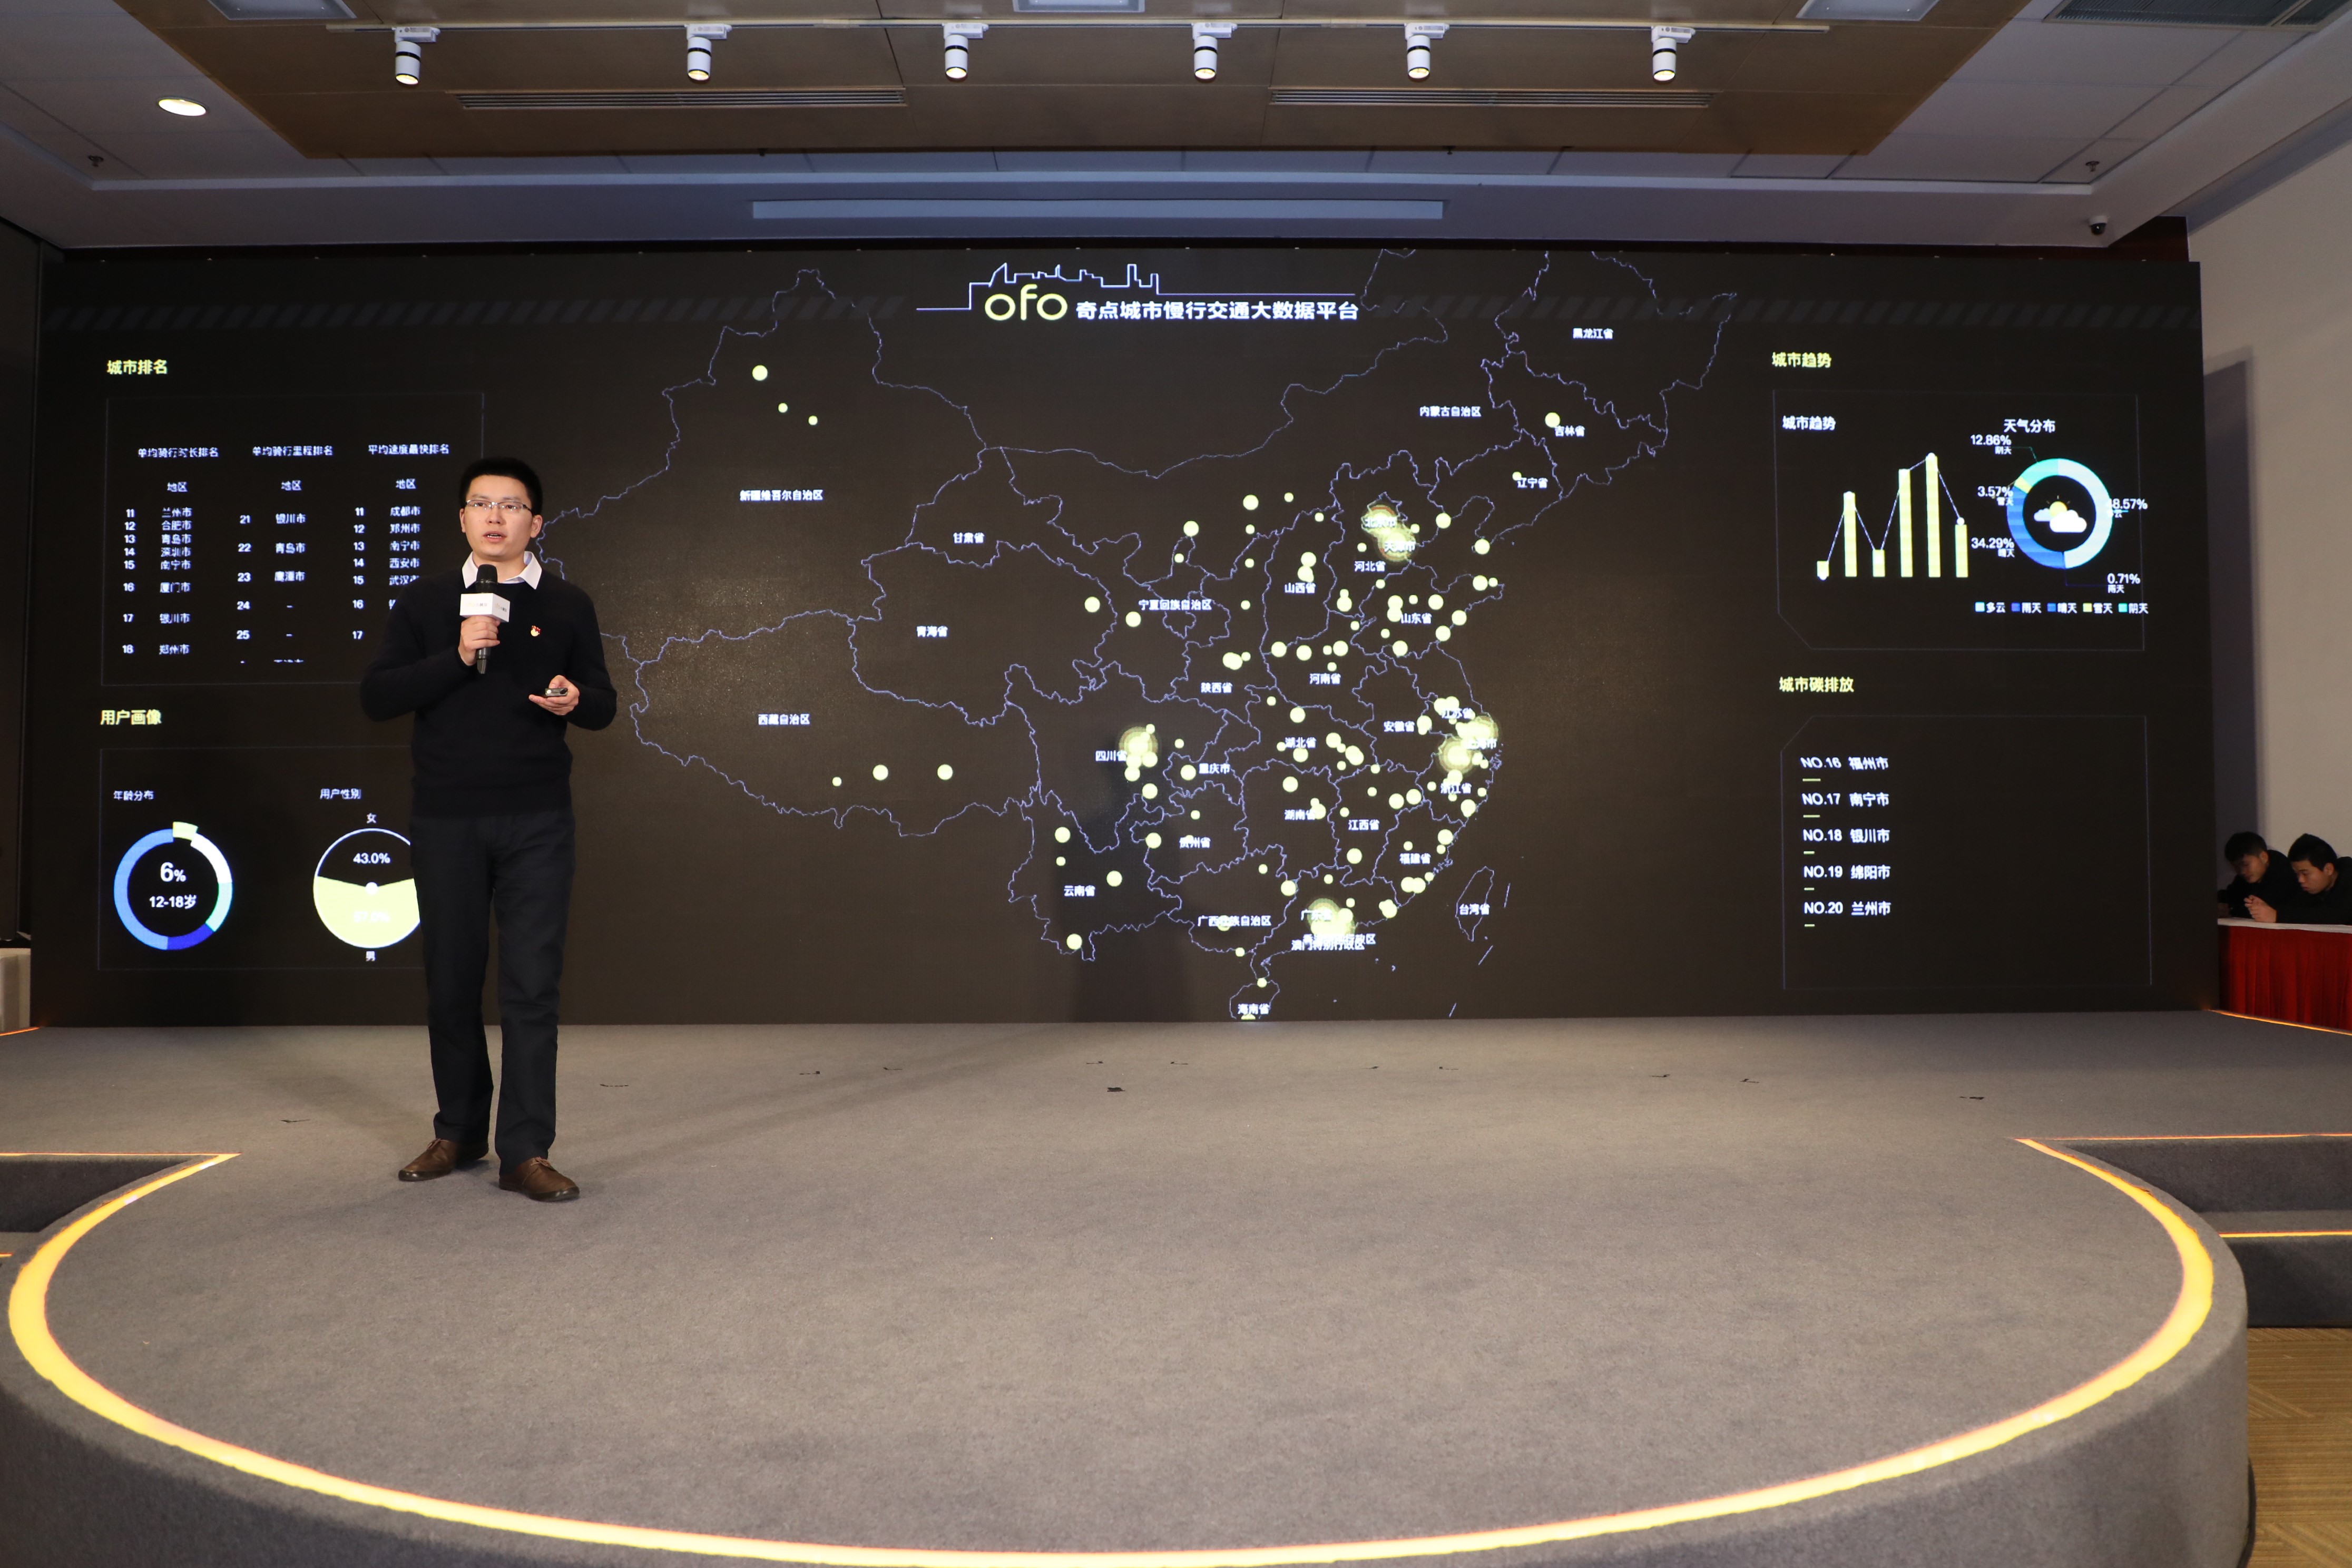  ofo发布奇点城市慢行交通大数据平台，向全国200座城市开放数据